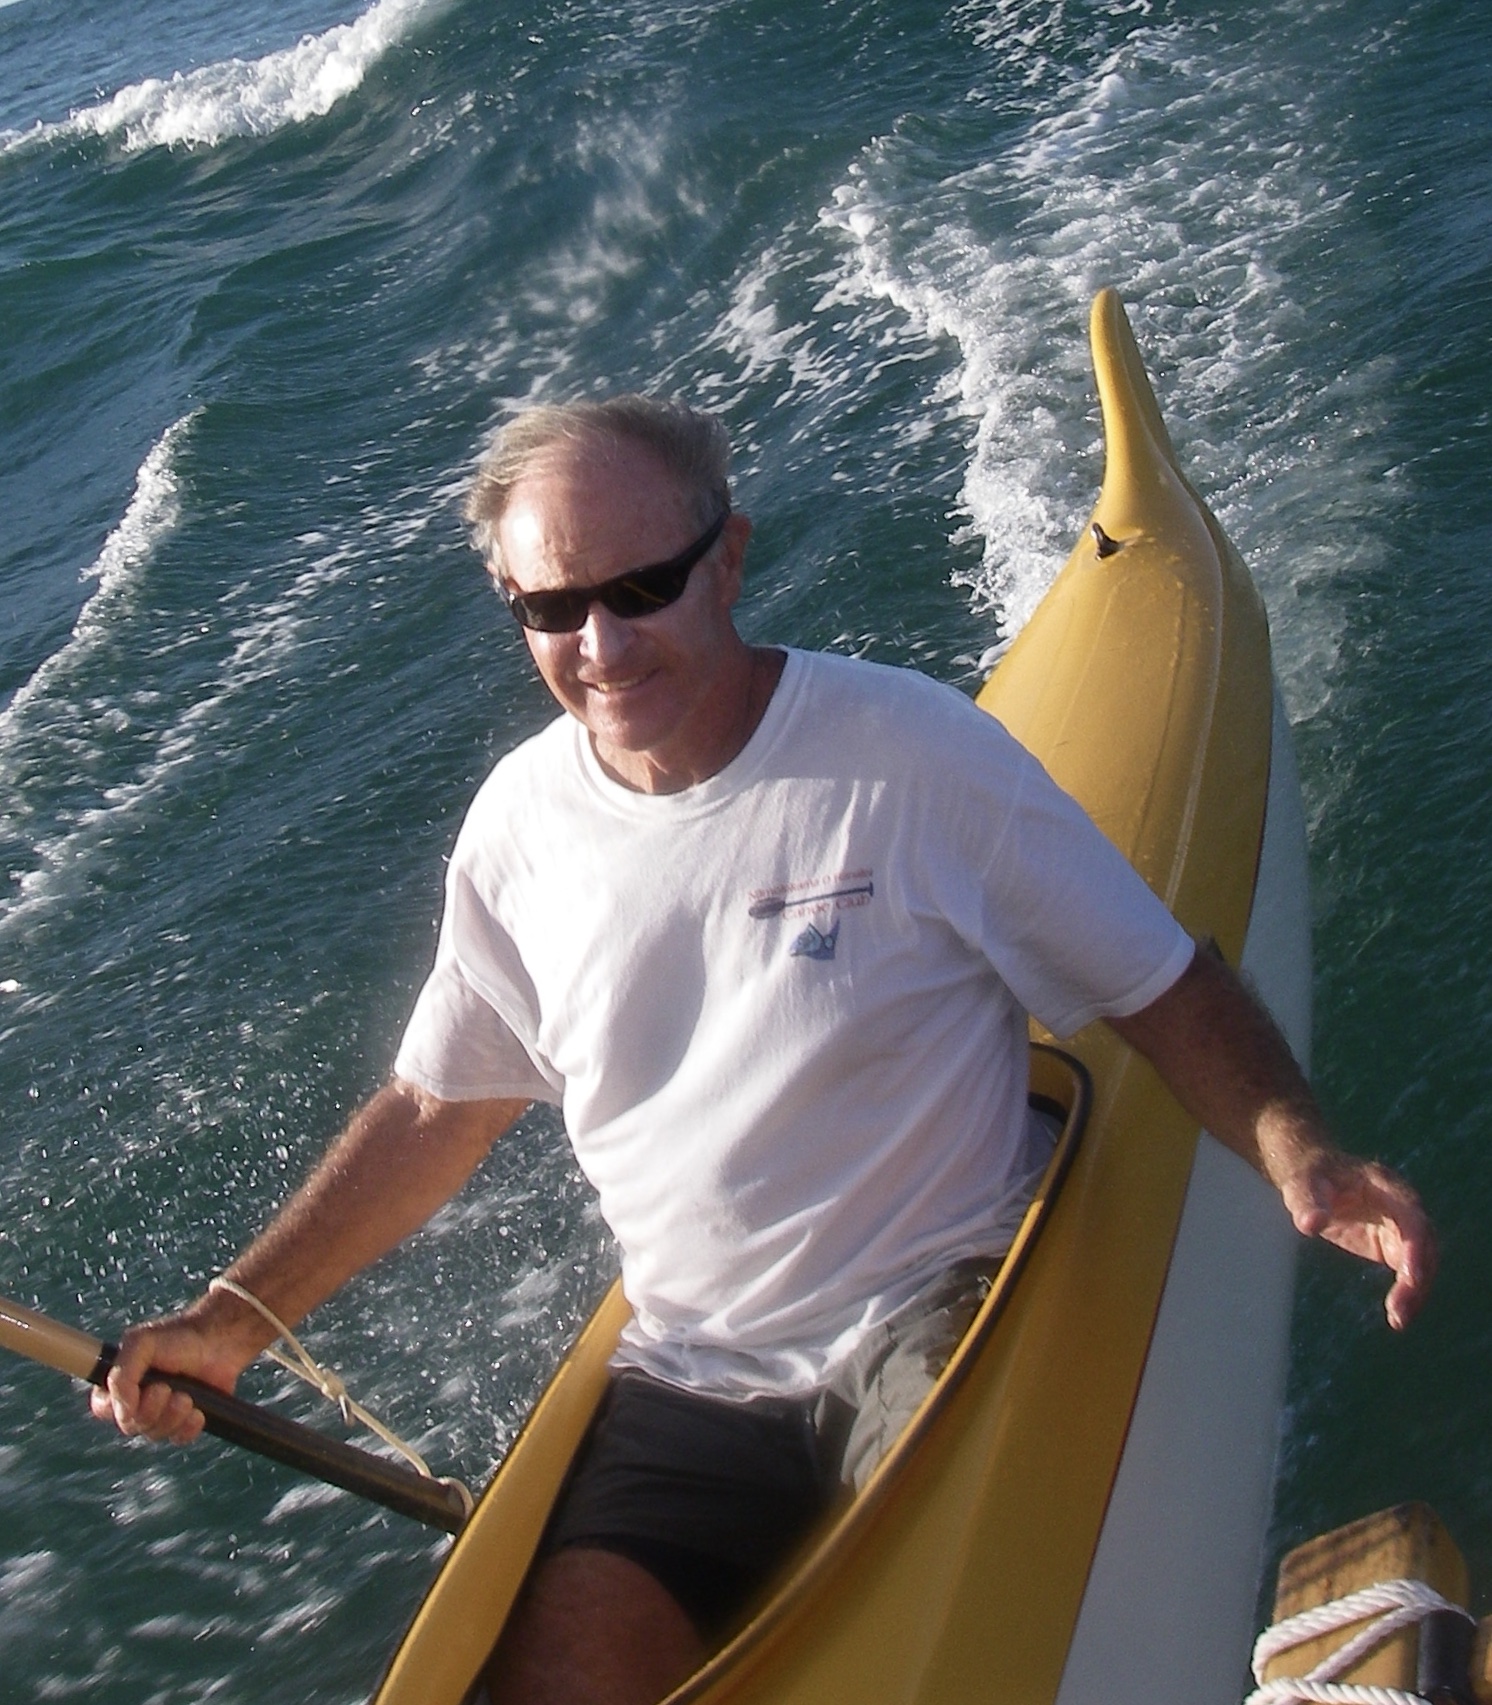 Nick Beck sail surfing